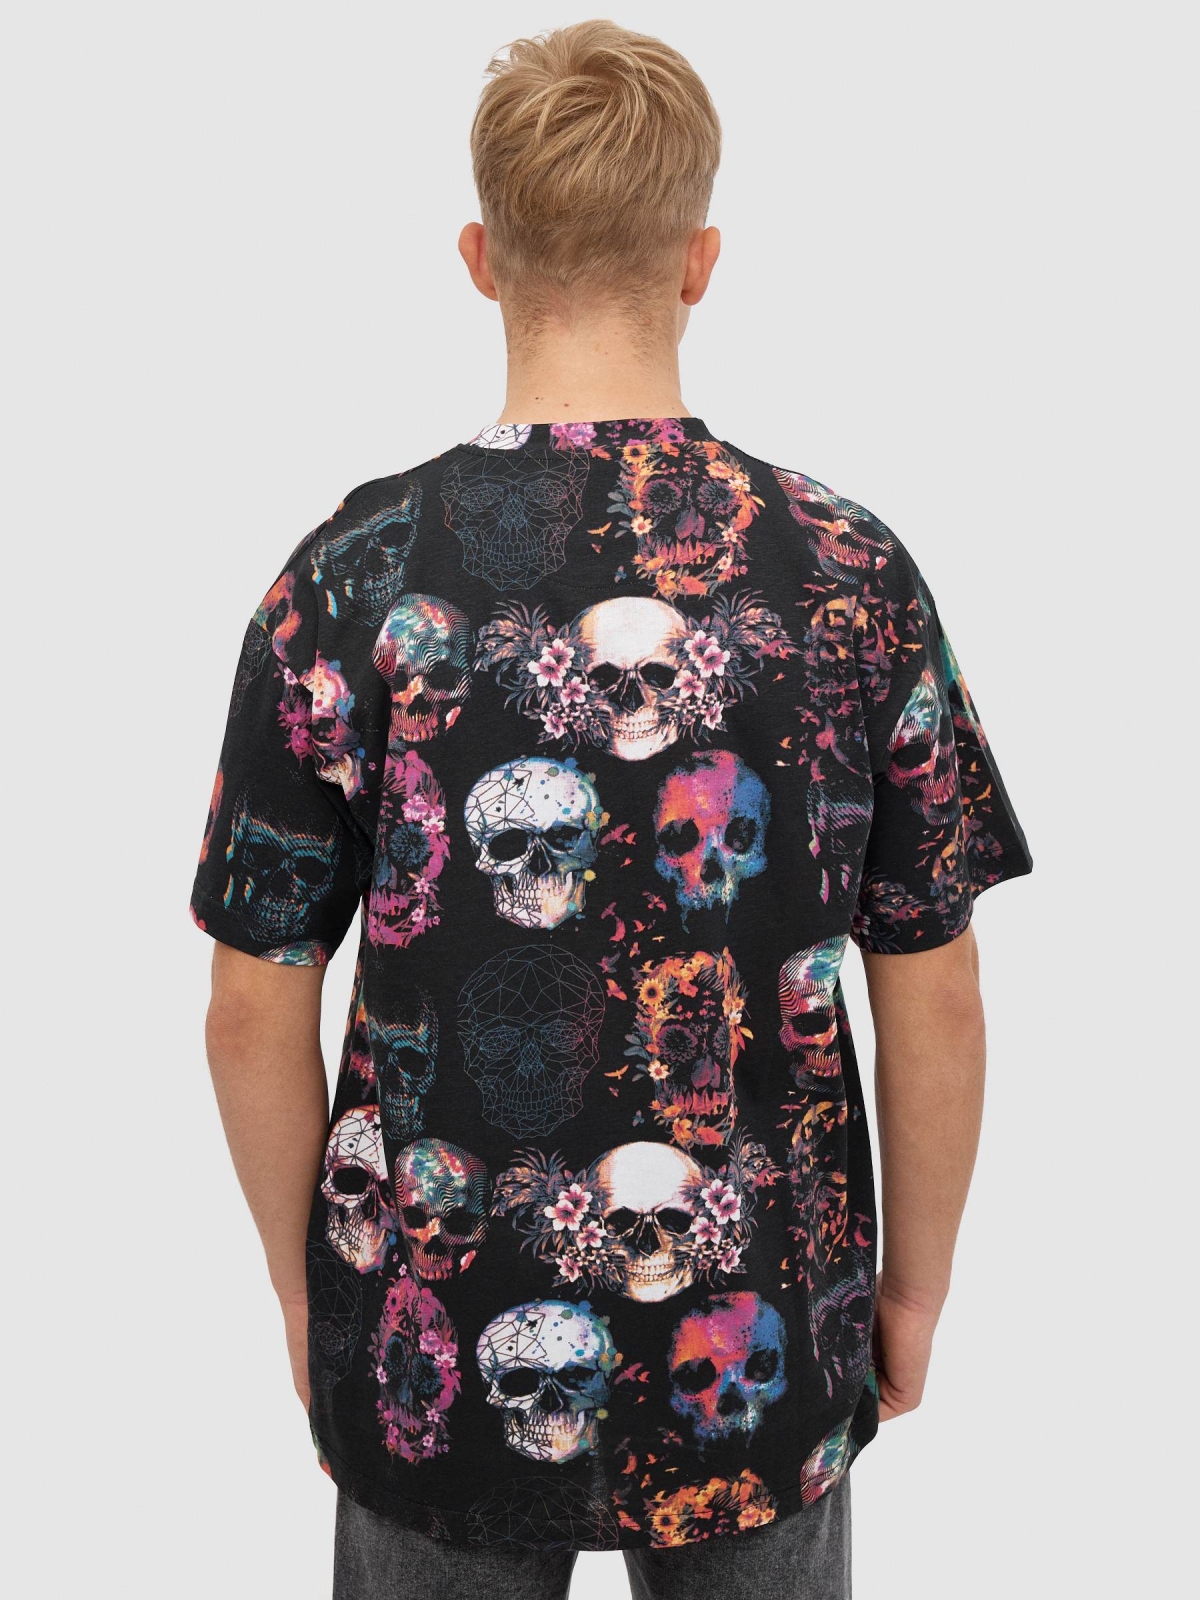 Multicoloured skull t-shirt black middle back view